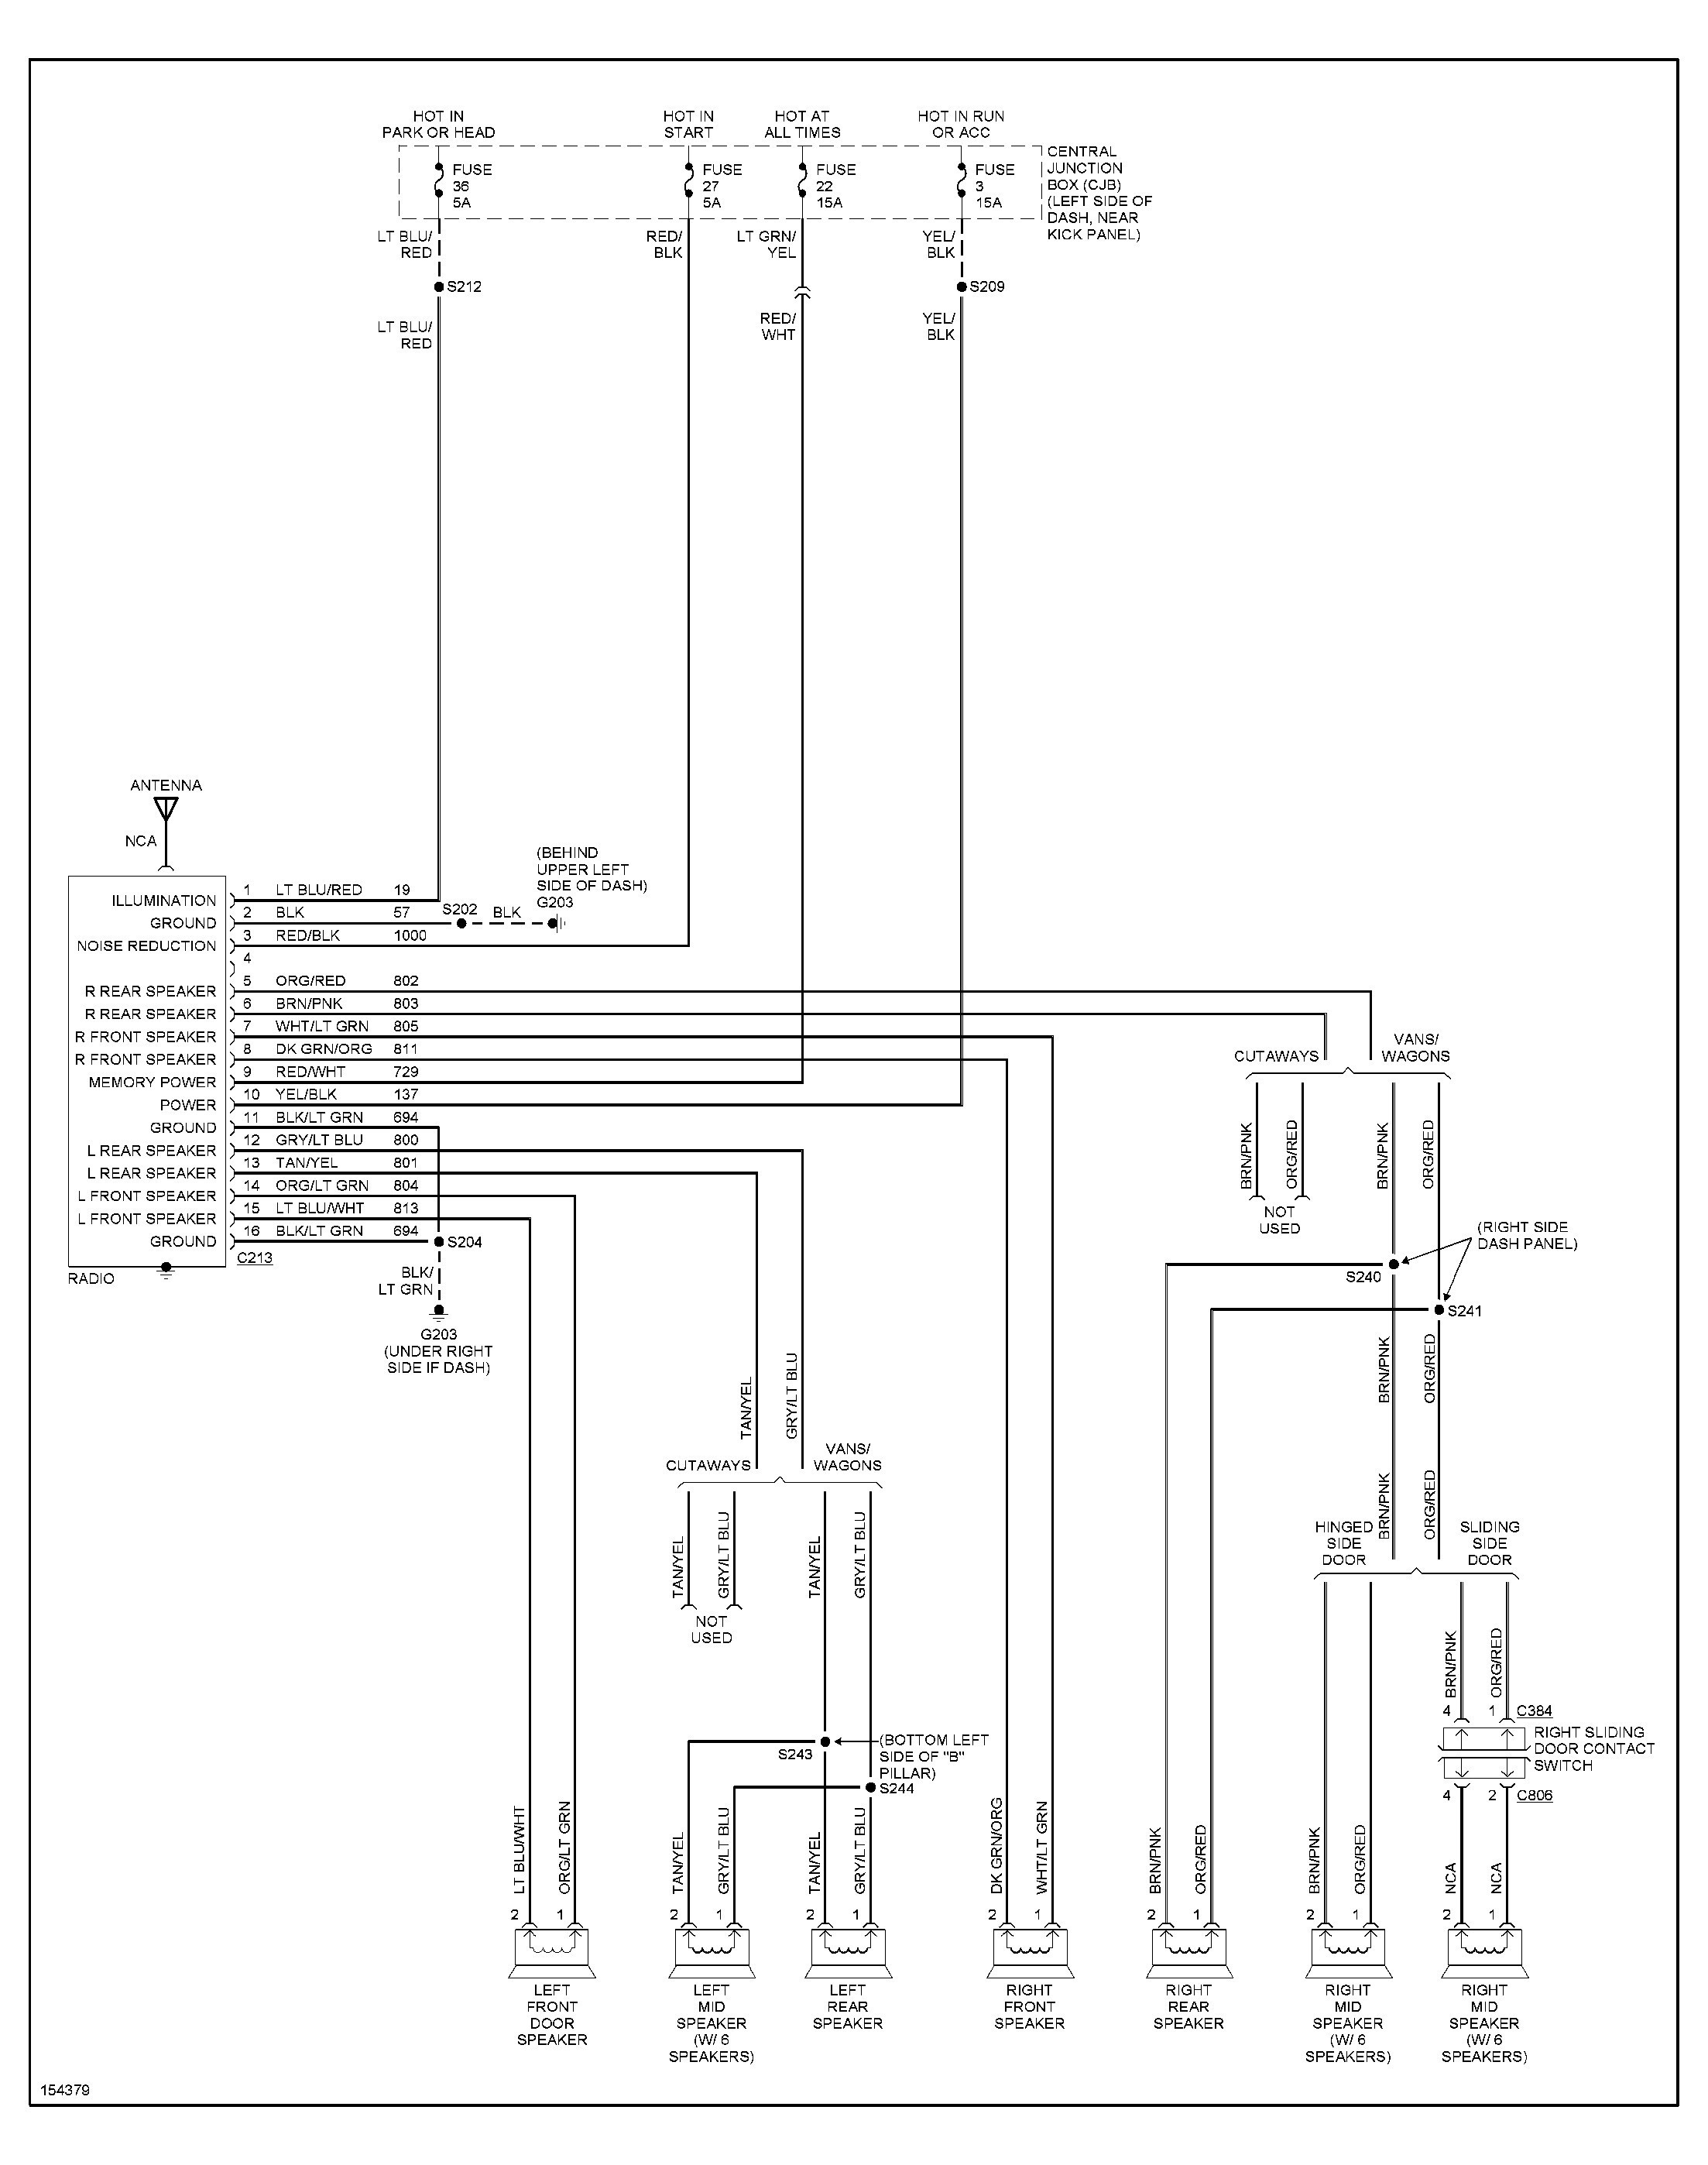 2000 Mercury Mountaineer Engine Diagram Mercury Mountaineer Tuner Wiring Diagram Wiring Diagram and Schematics Of 2000 Mercury Mountaineer Engine Diagram